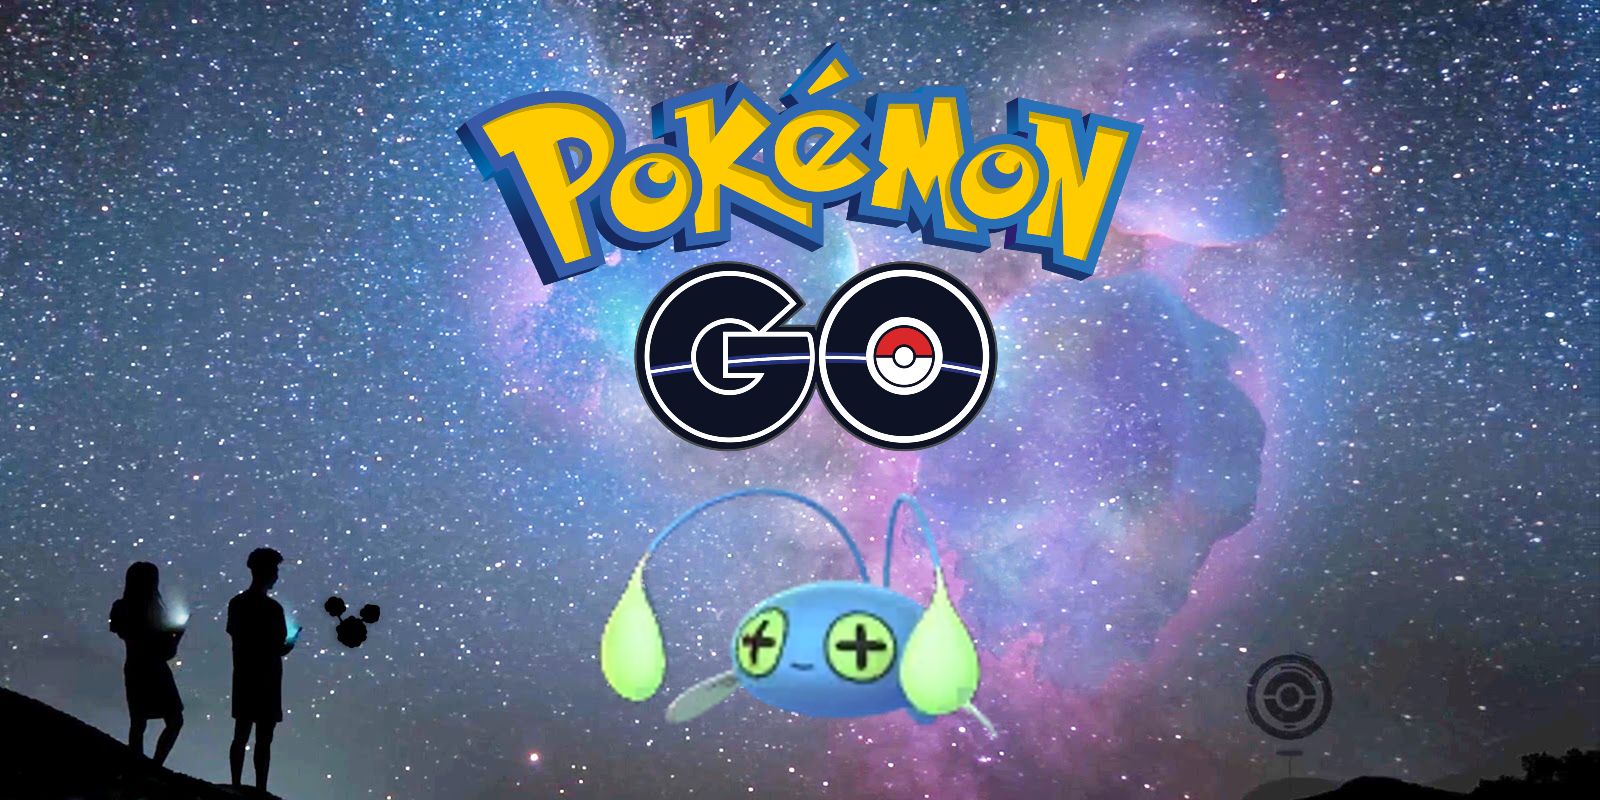 Chinchou beneath the Pokemon GO logo for the Festival of Lights 2022